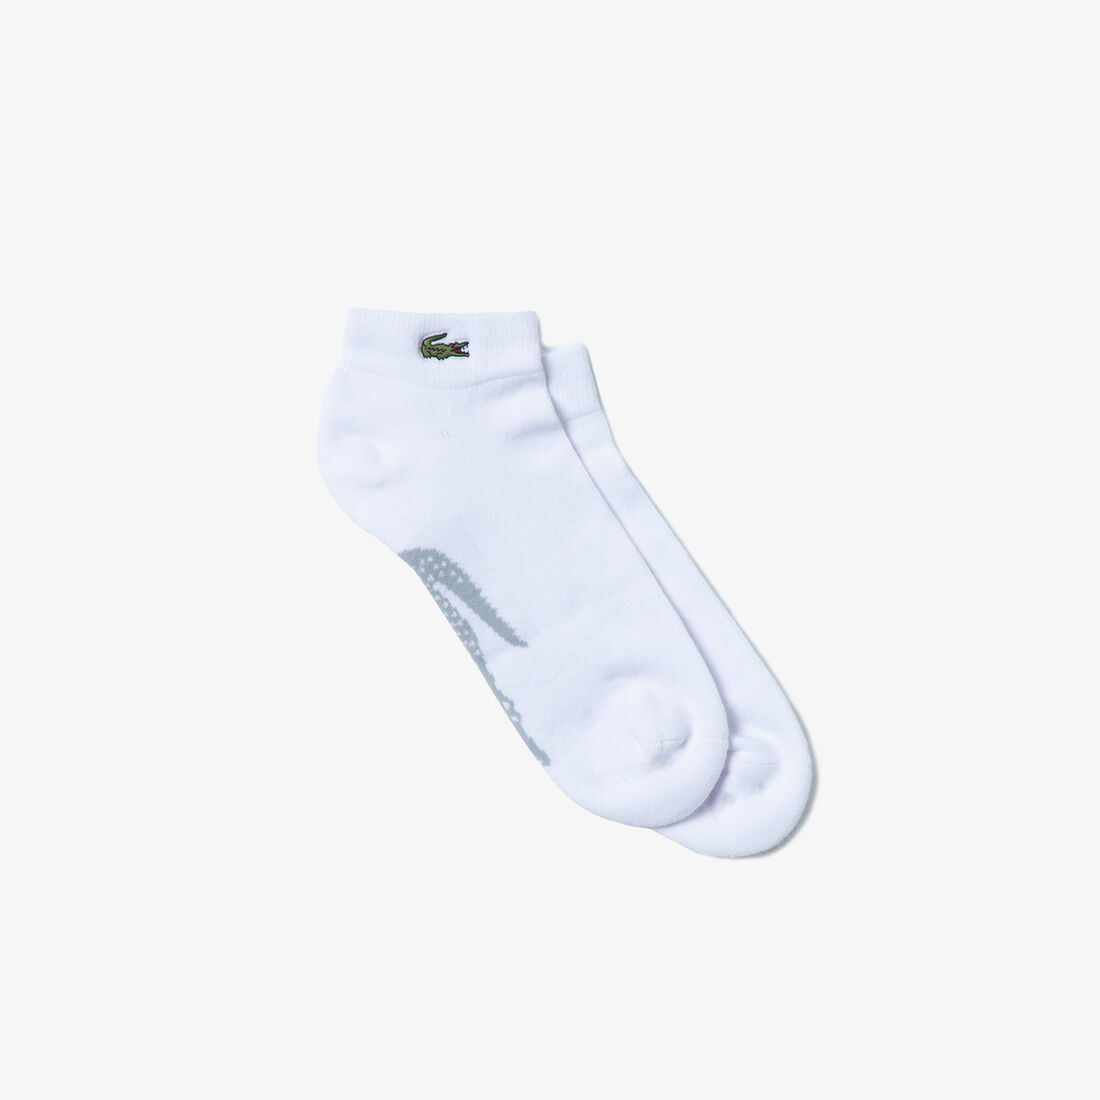 Men's Lacoste SPORT Printed Crocodile Low-Cut Cotton Socks